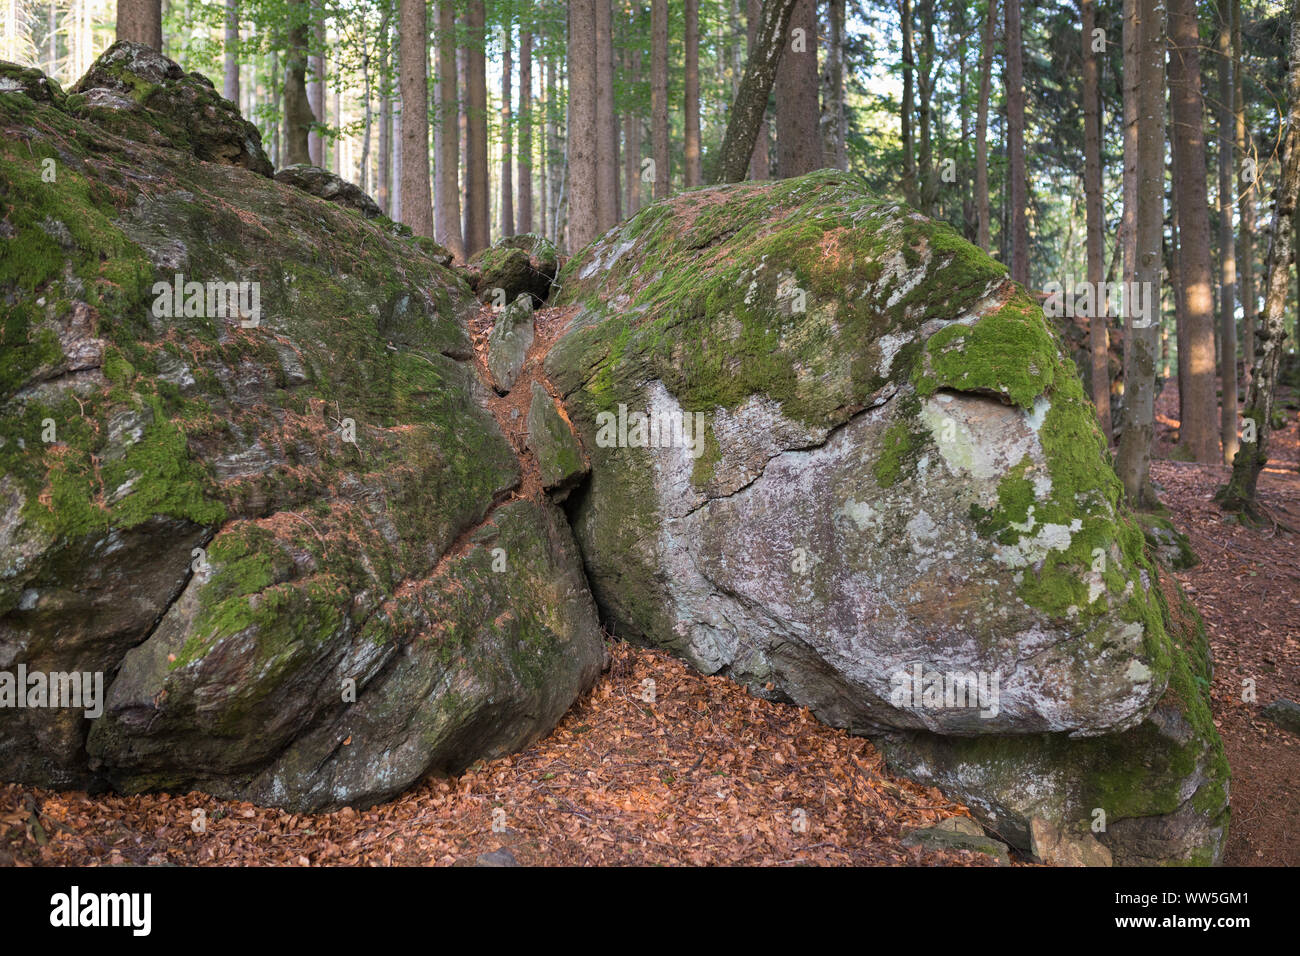 Rocks gathering moss in national park forest 'Bayerischer Wald', Bavaria, Germany Stock Photo